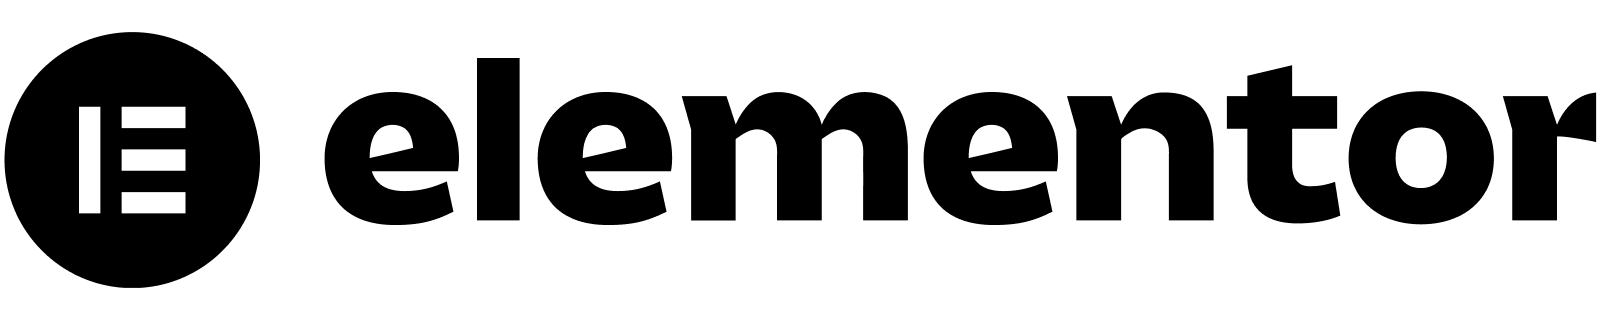 Black Elementor Logo